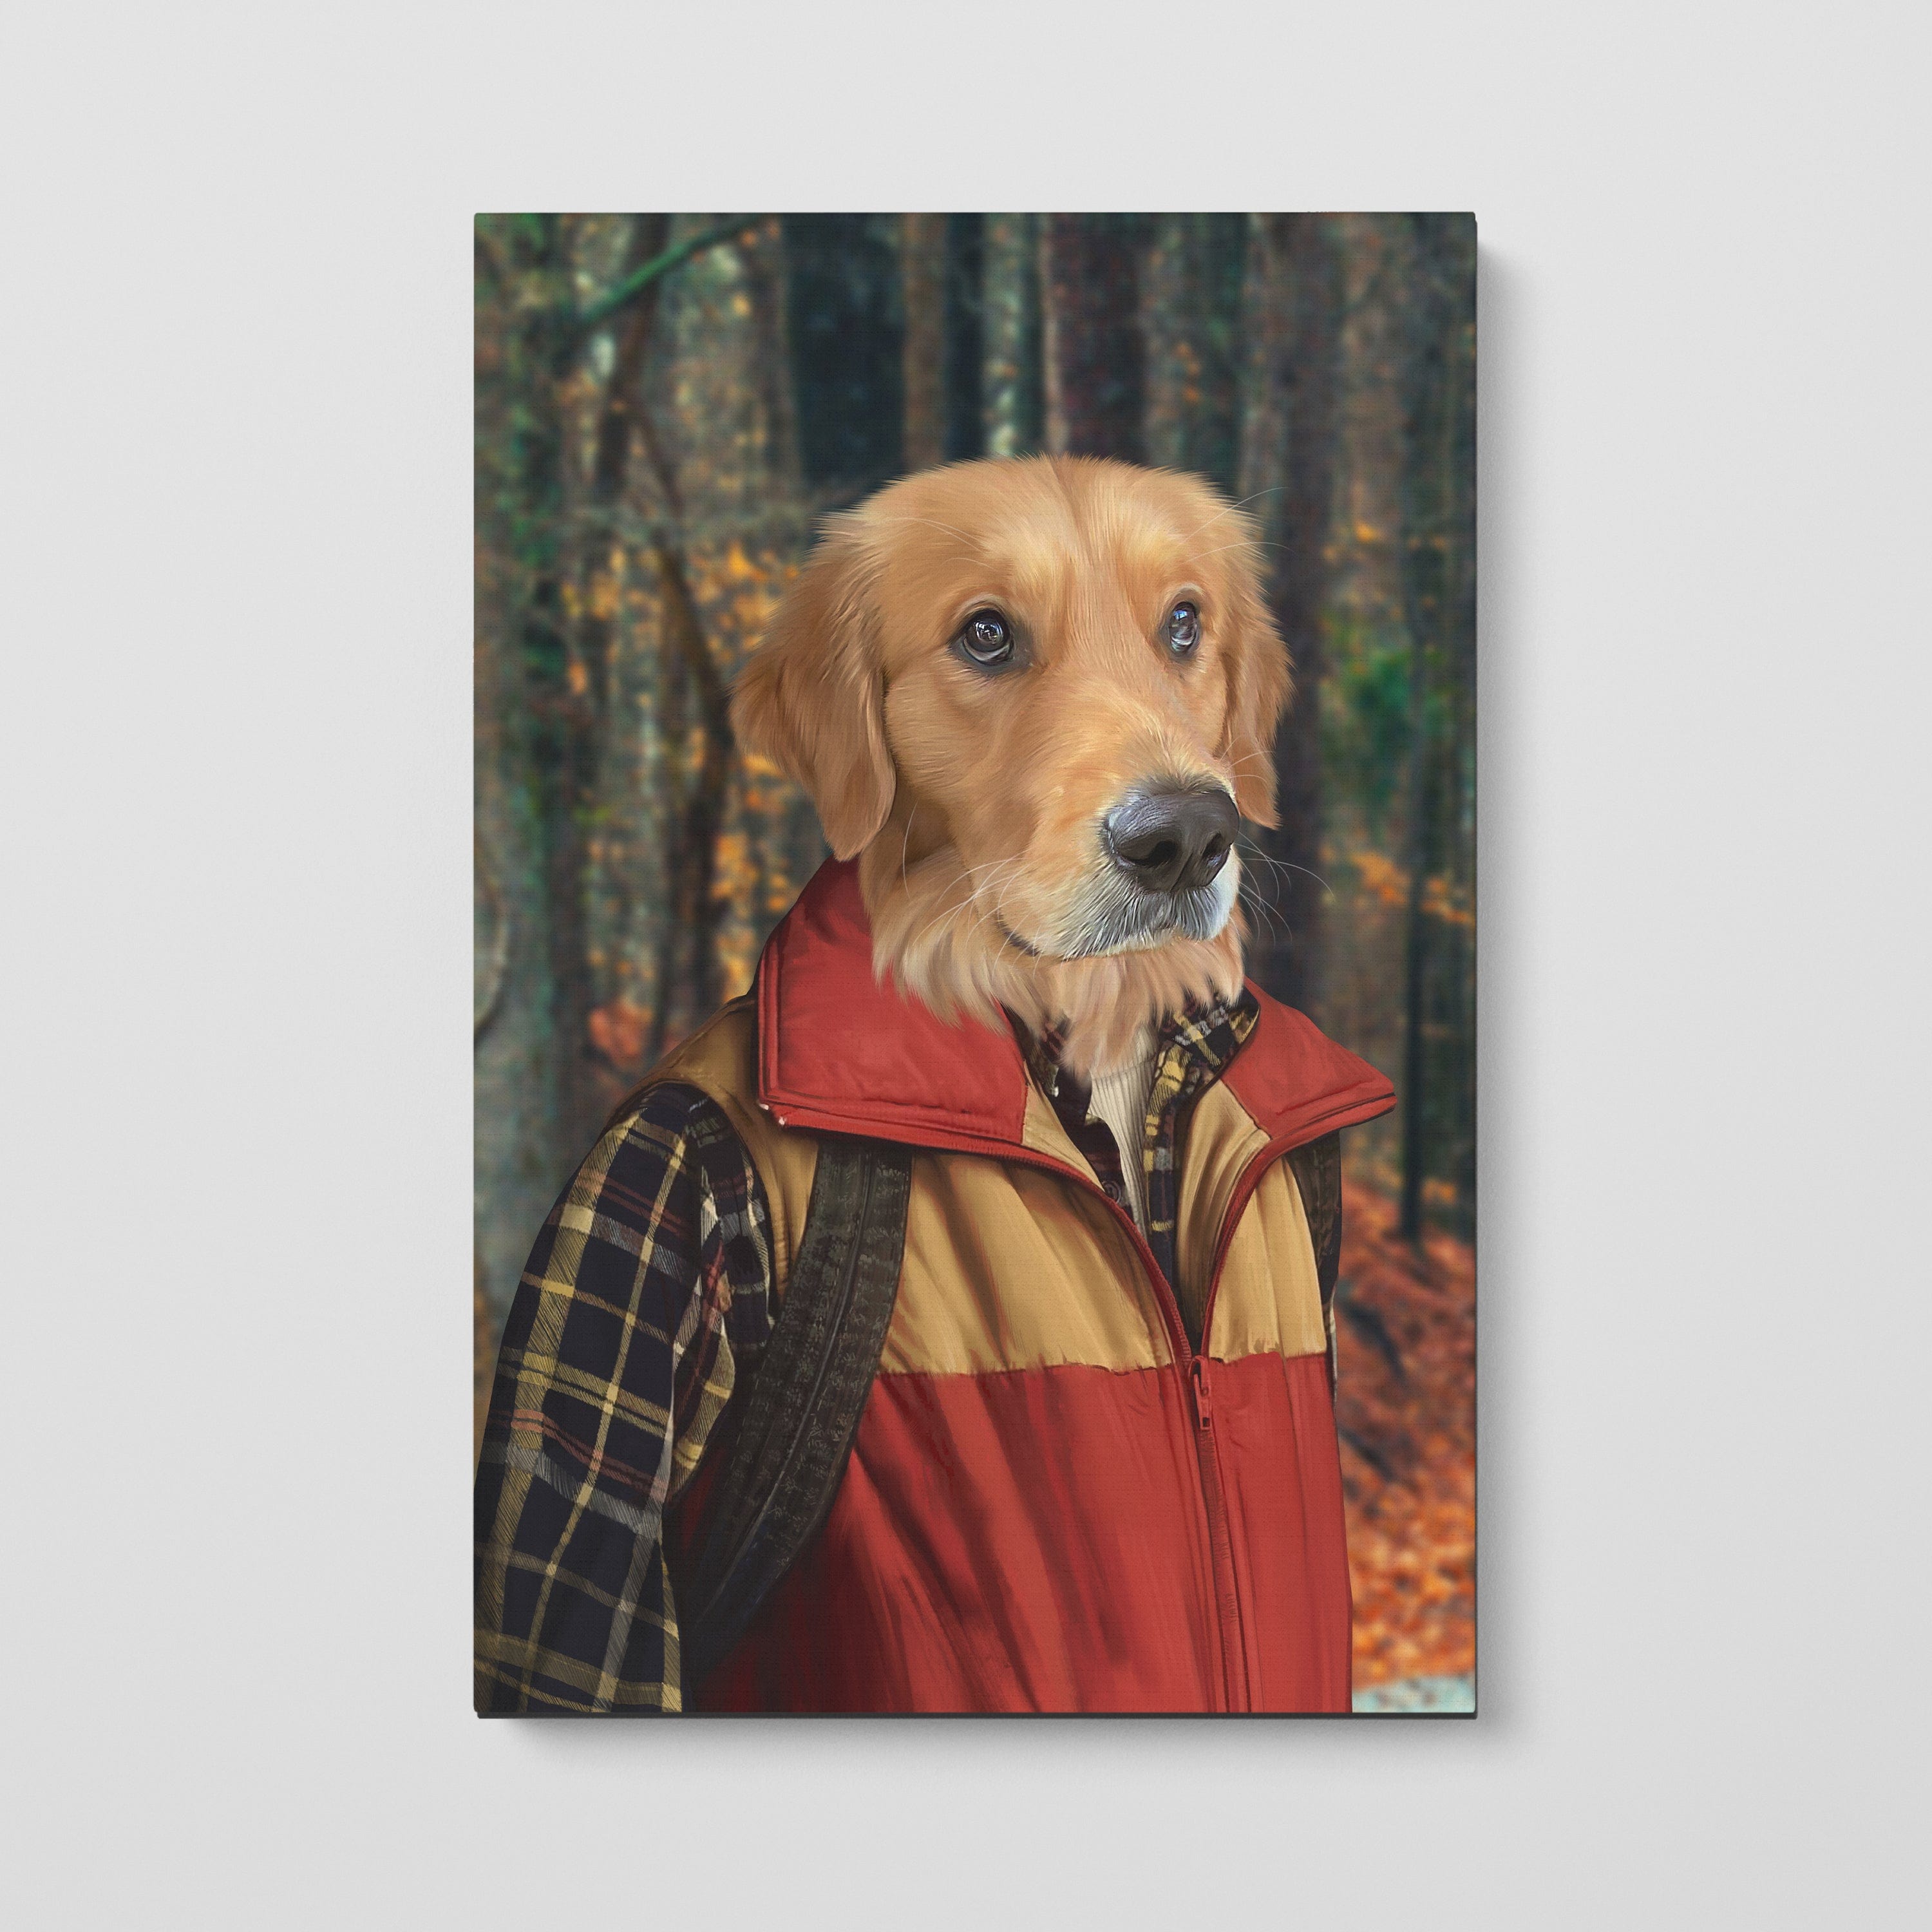 The Best Friend - Custom Pet Canvas